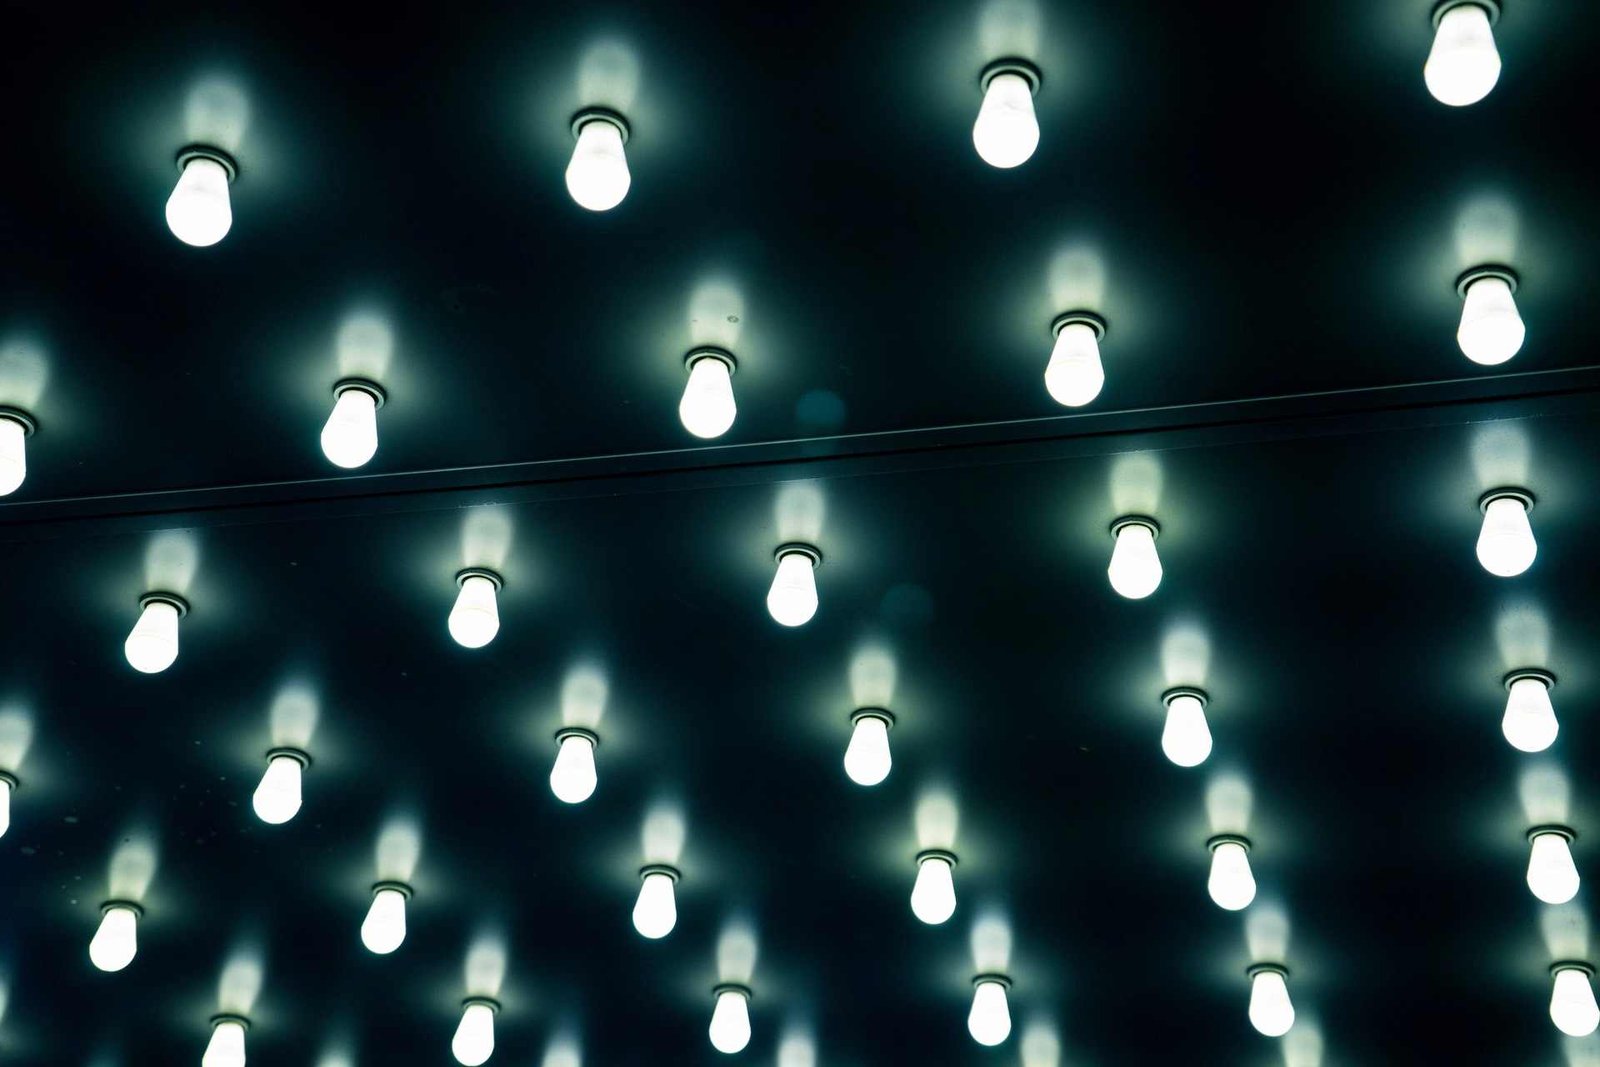 LED Headlights Bulbs